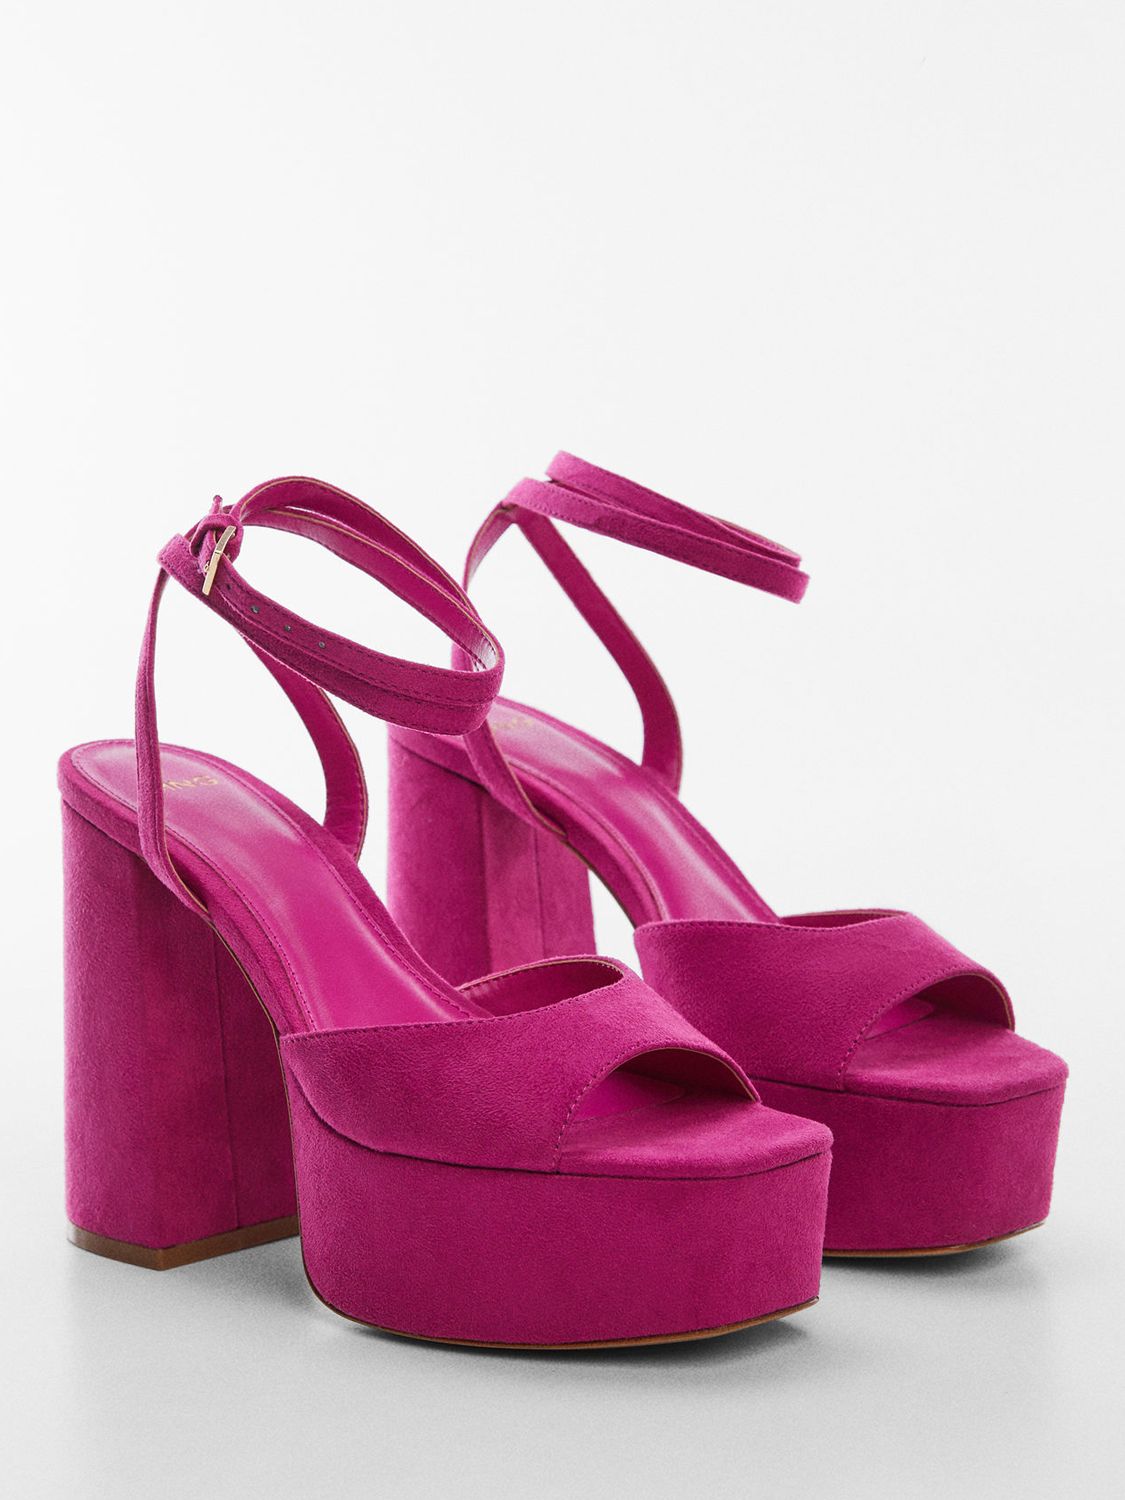 Mango Sou Platform Ankle Cuff Sandals, Bright Pink at John Lewis & Partners